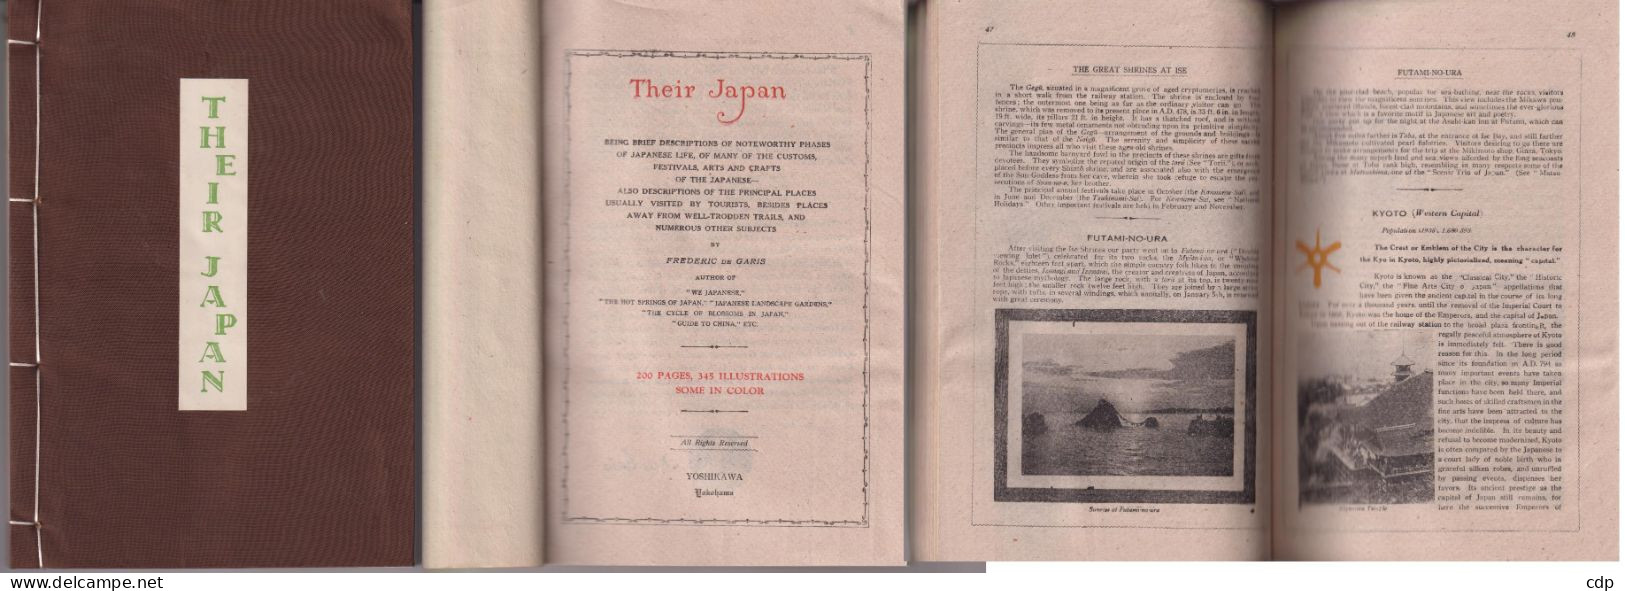 Their Japan   1936 - Asia